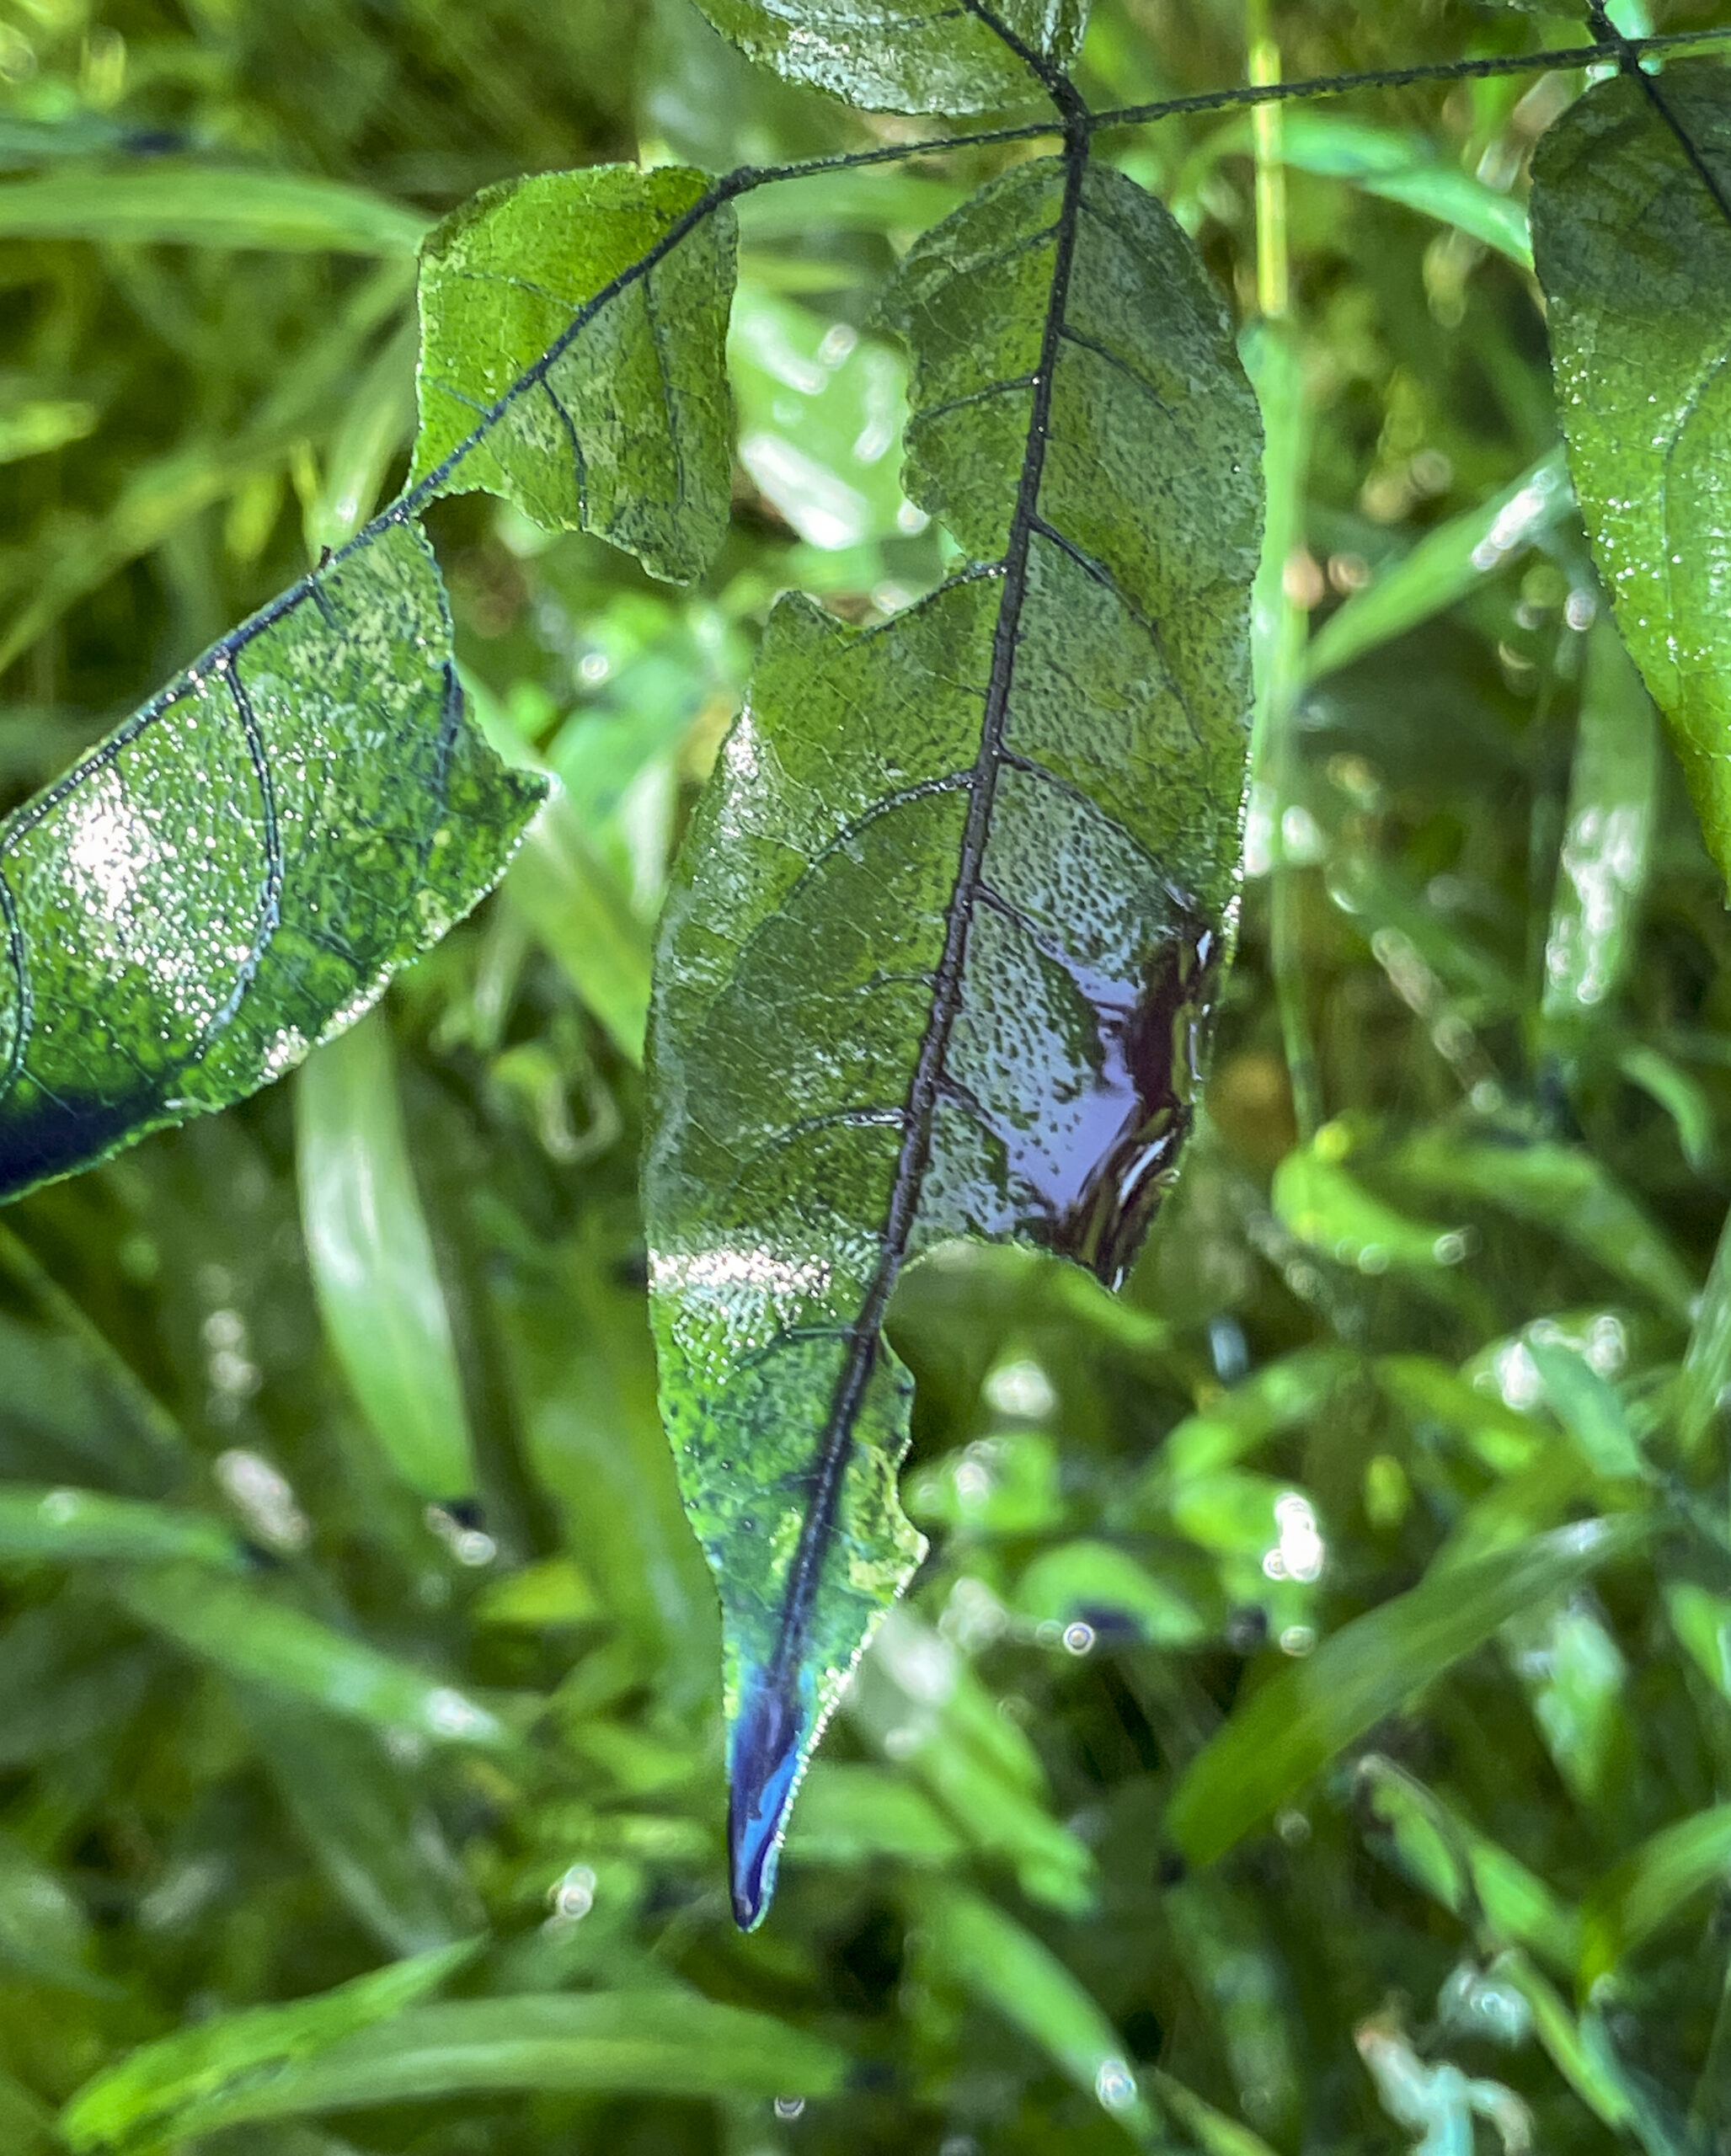 A dark liquid clings to a green leaf